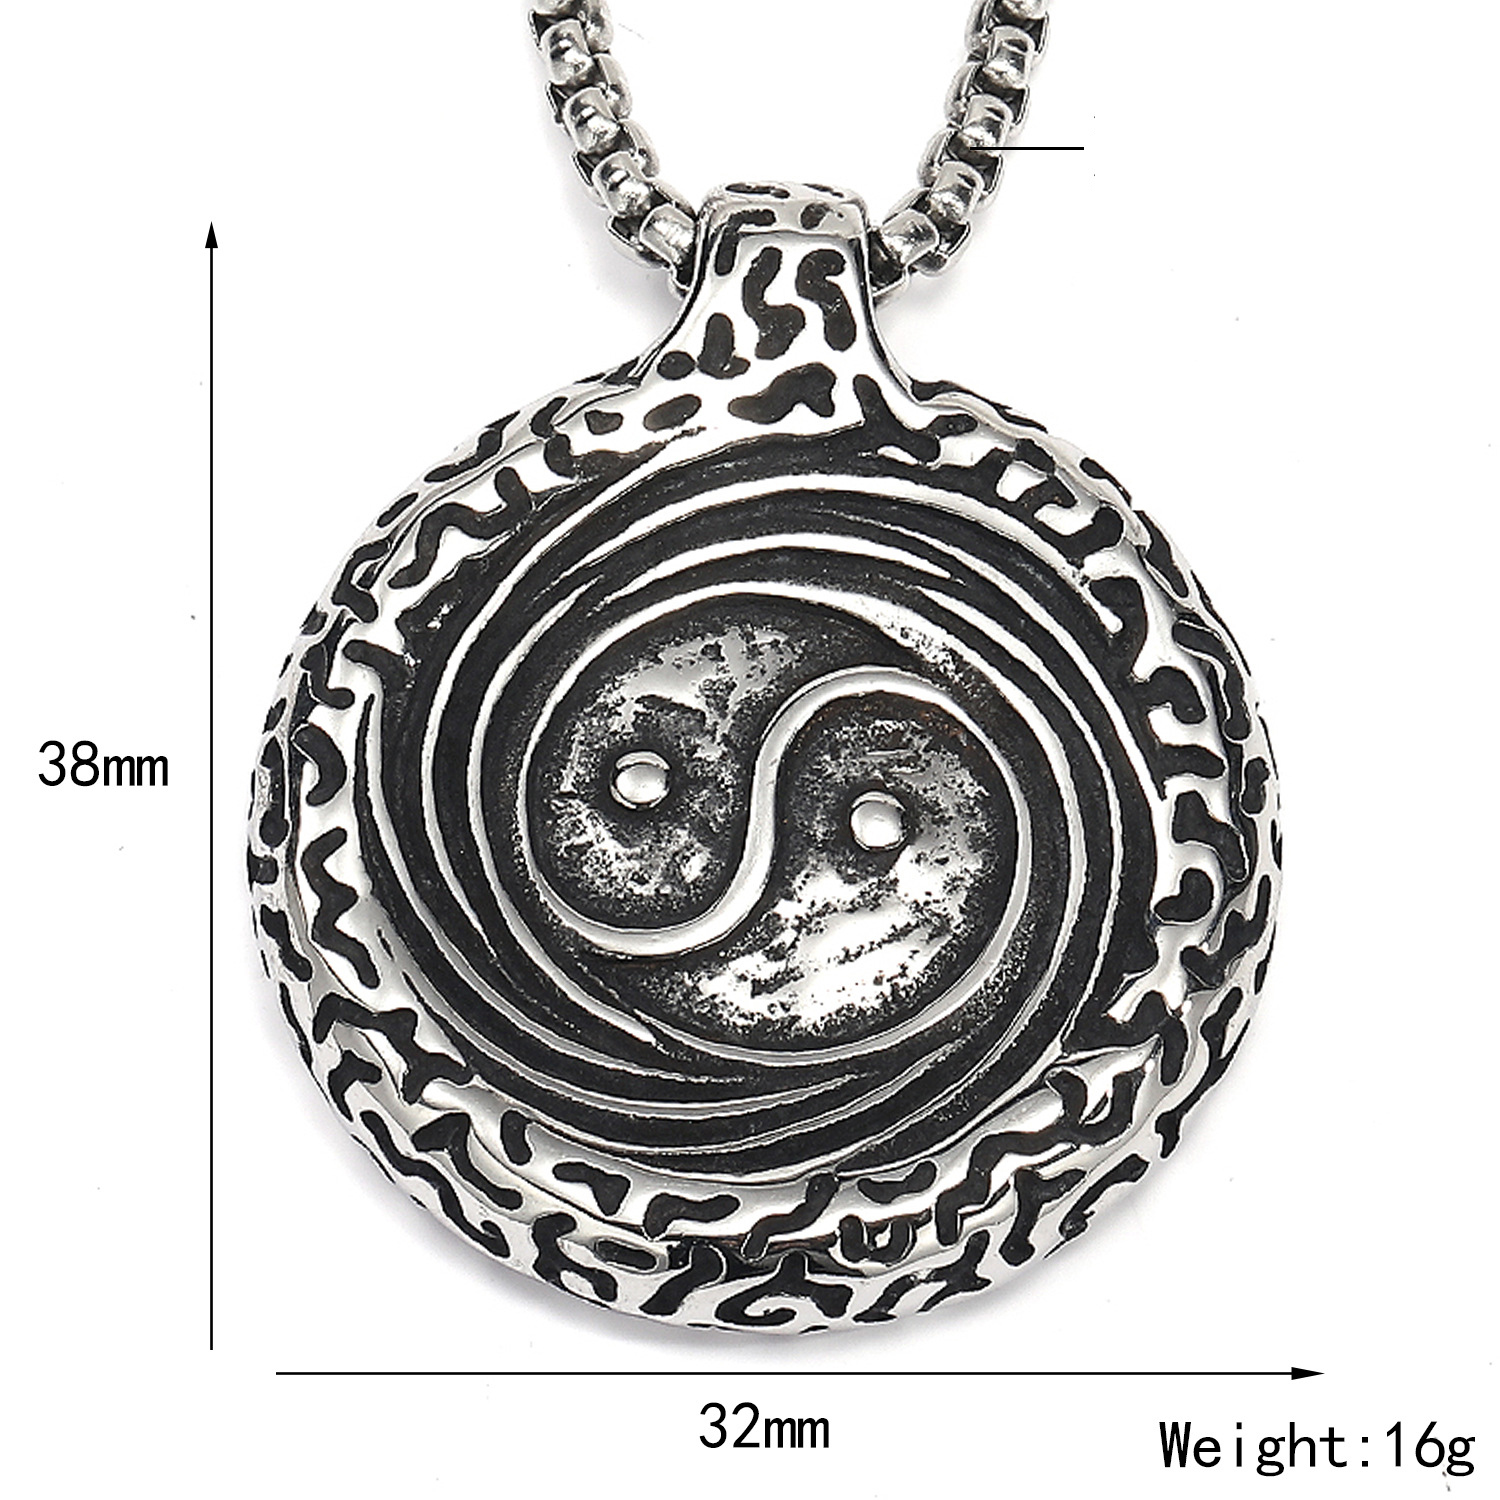 Steel colored pendant